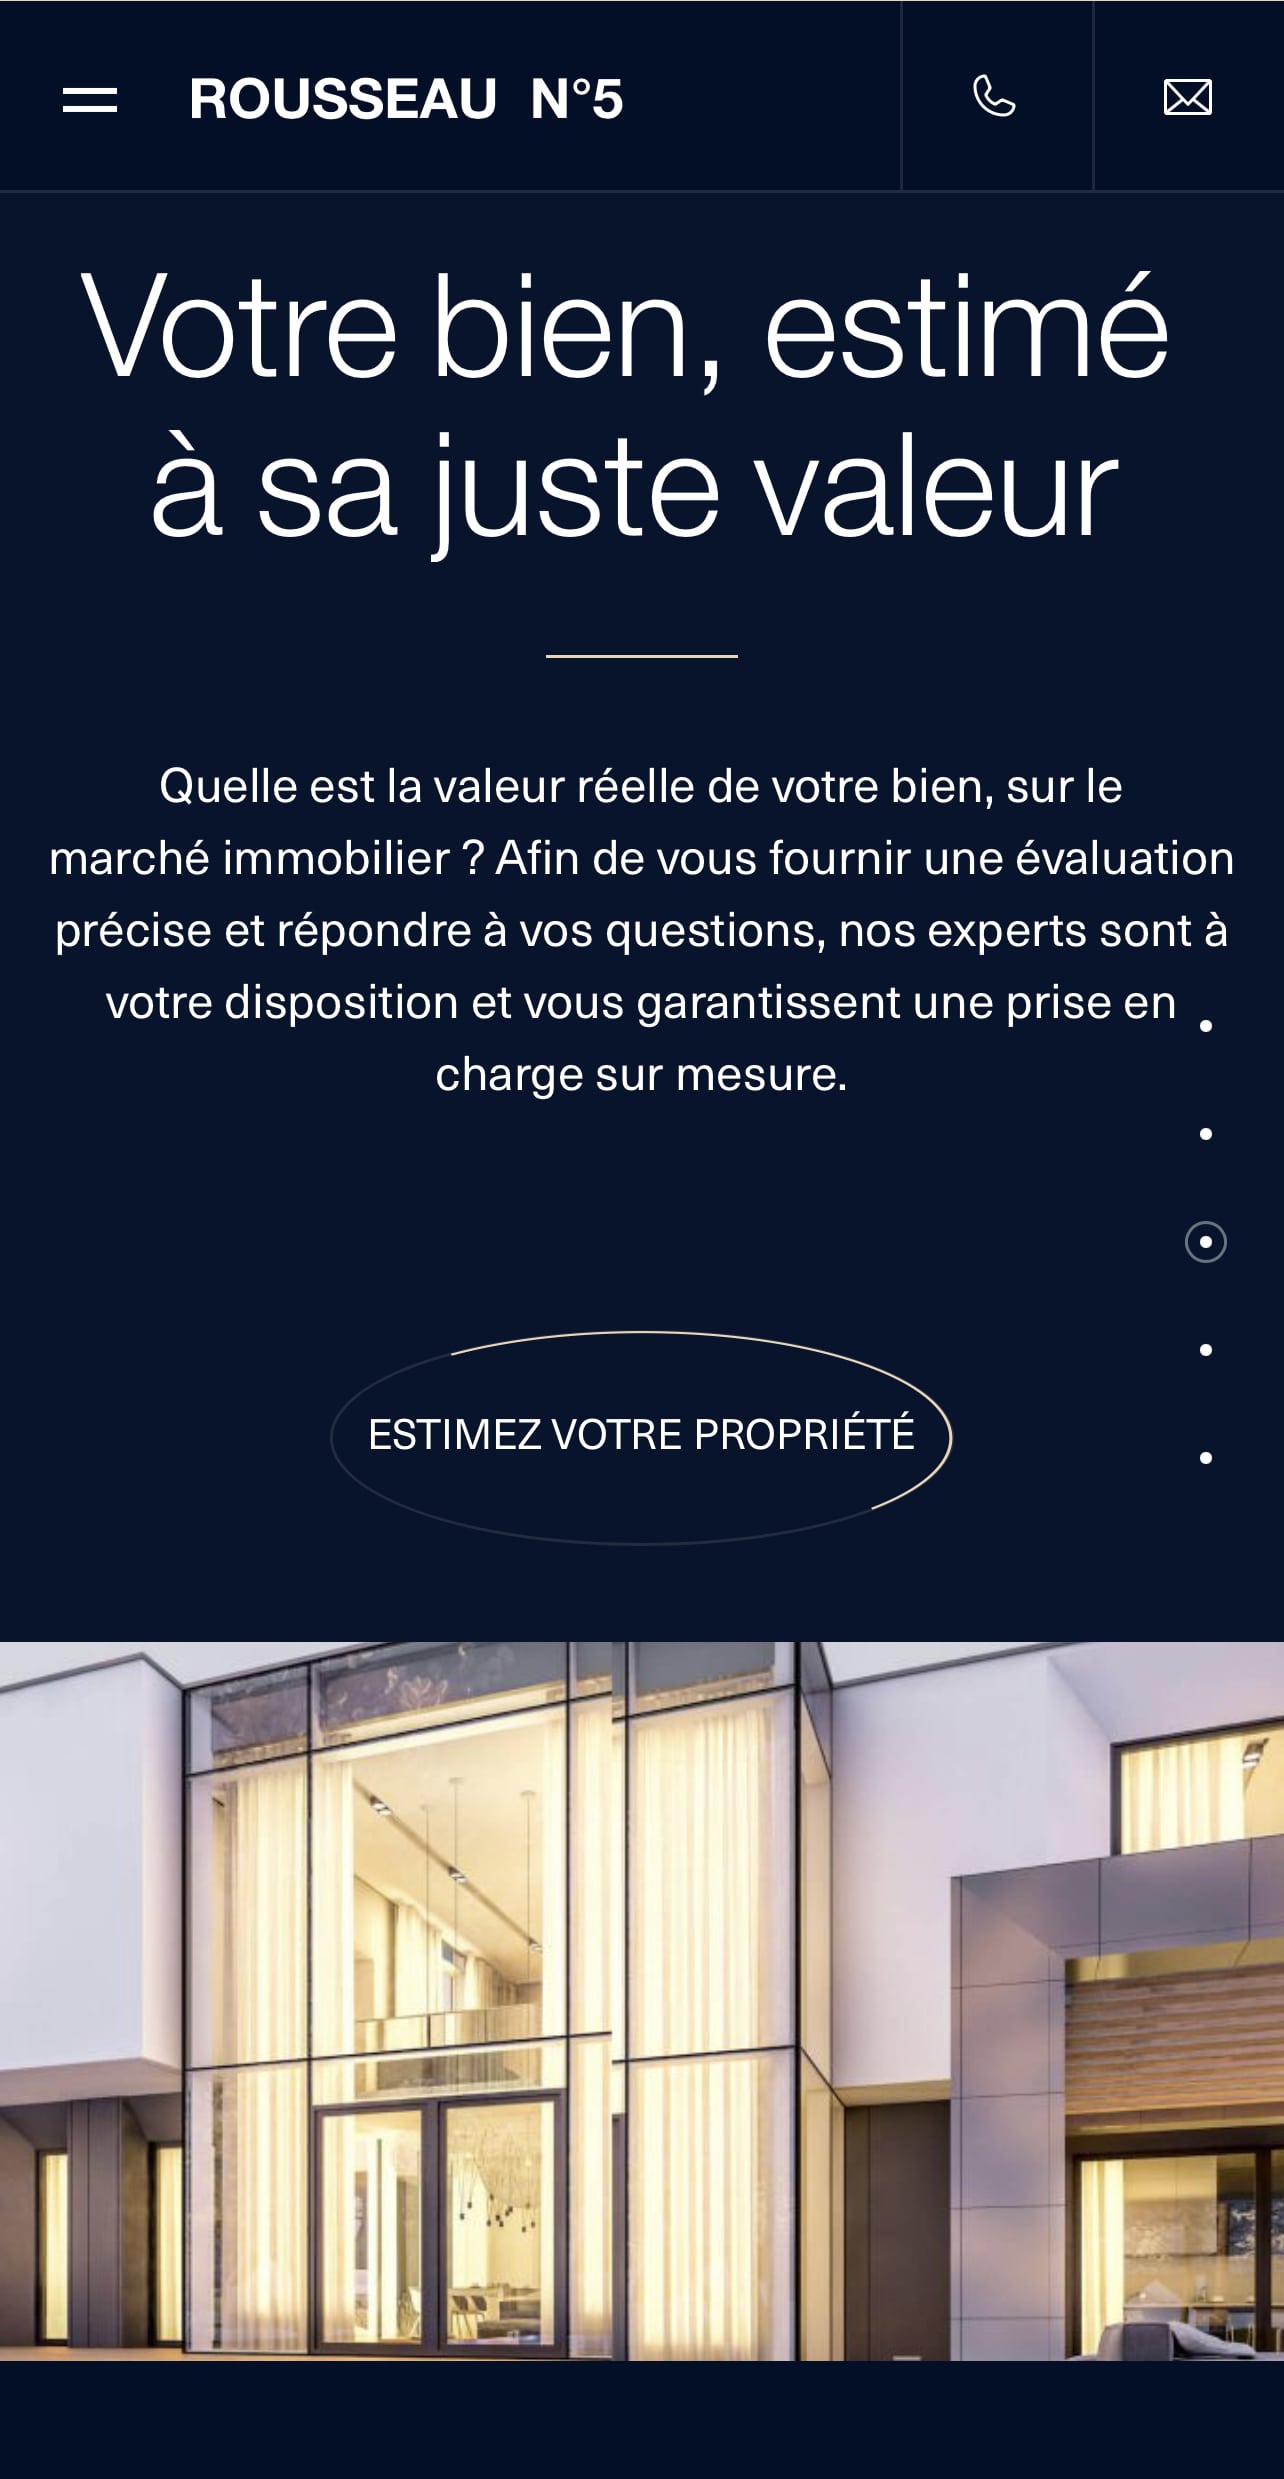 Rousseau N°5 website mobile view 2